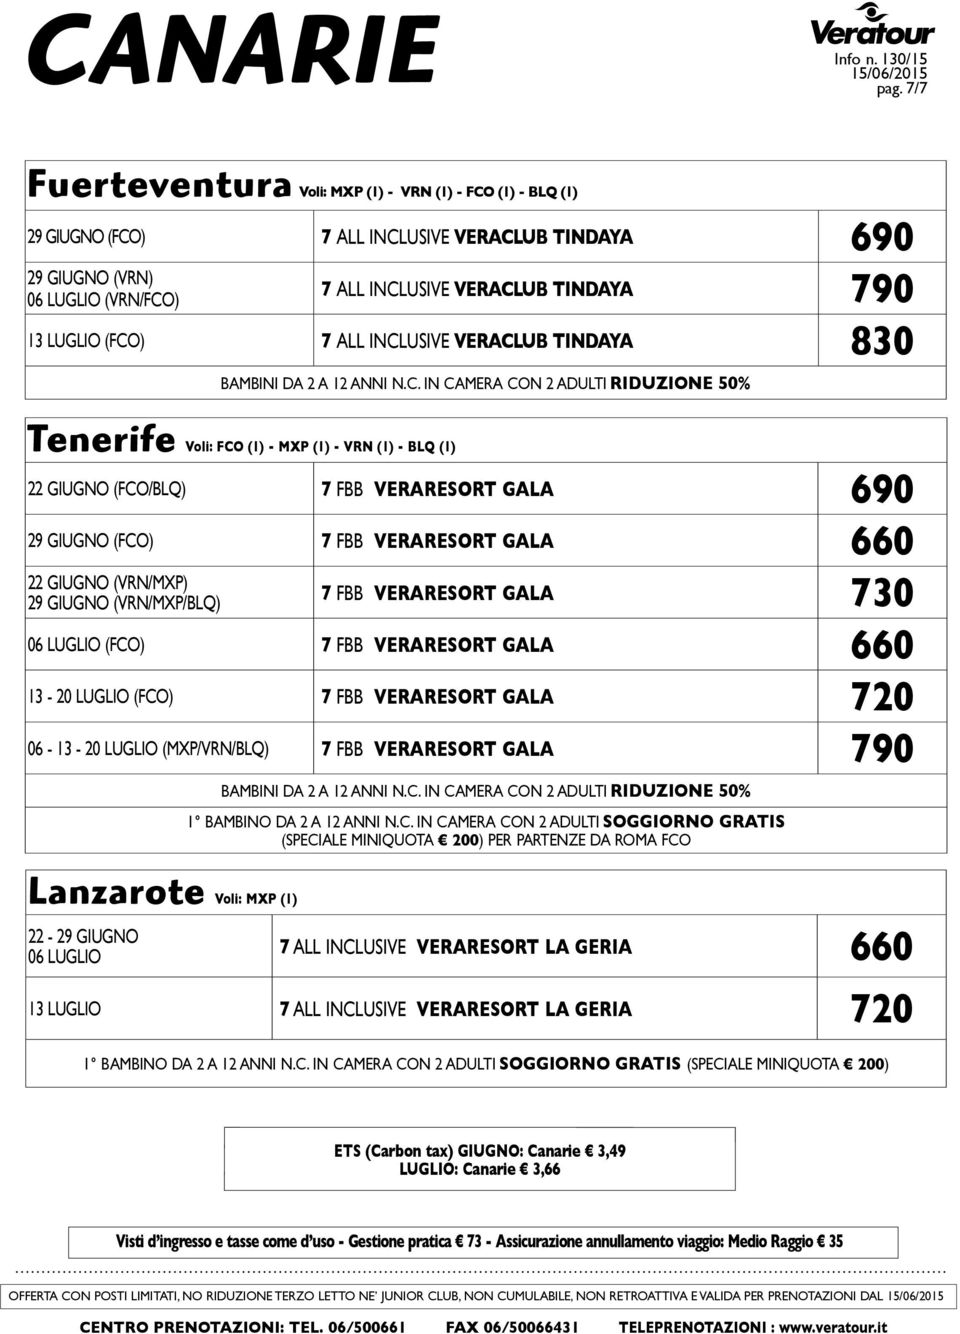 (FCO) 7 ALL INCLUSIVE VERACLUB TINDAYA 830 Tenerife Voli: FCO (1) - MXP (1) - VRN (1) - BLQ (1) 22 GIUGNO (FCO/BLQ) 7 FBB VERARESORT GALA 690 29 GIUGNO (FCO) 7 FBB VERARESORT GALA 660 22 GIUGNO